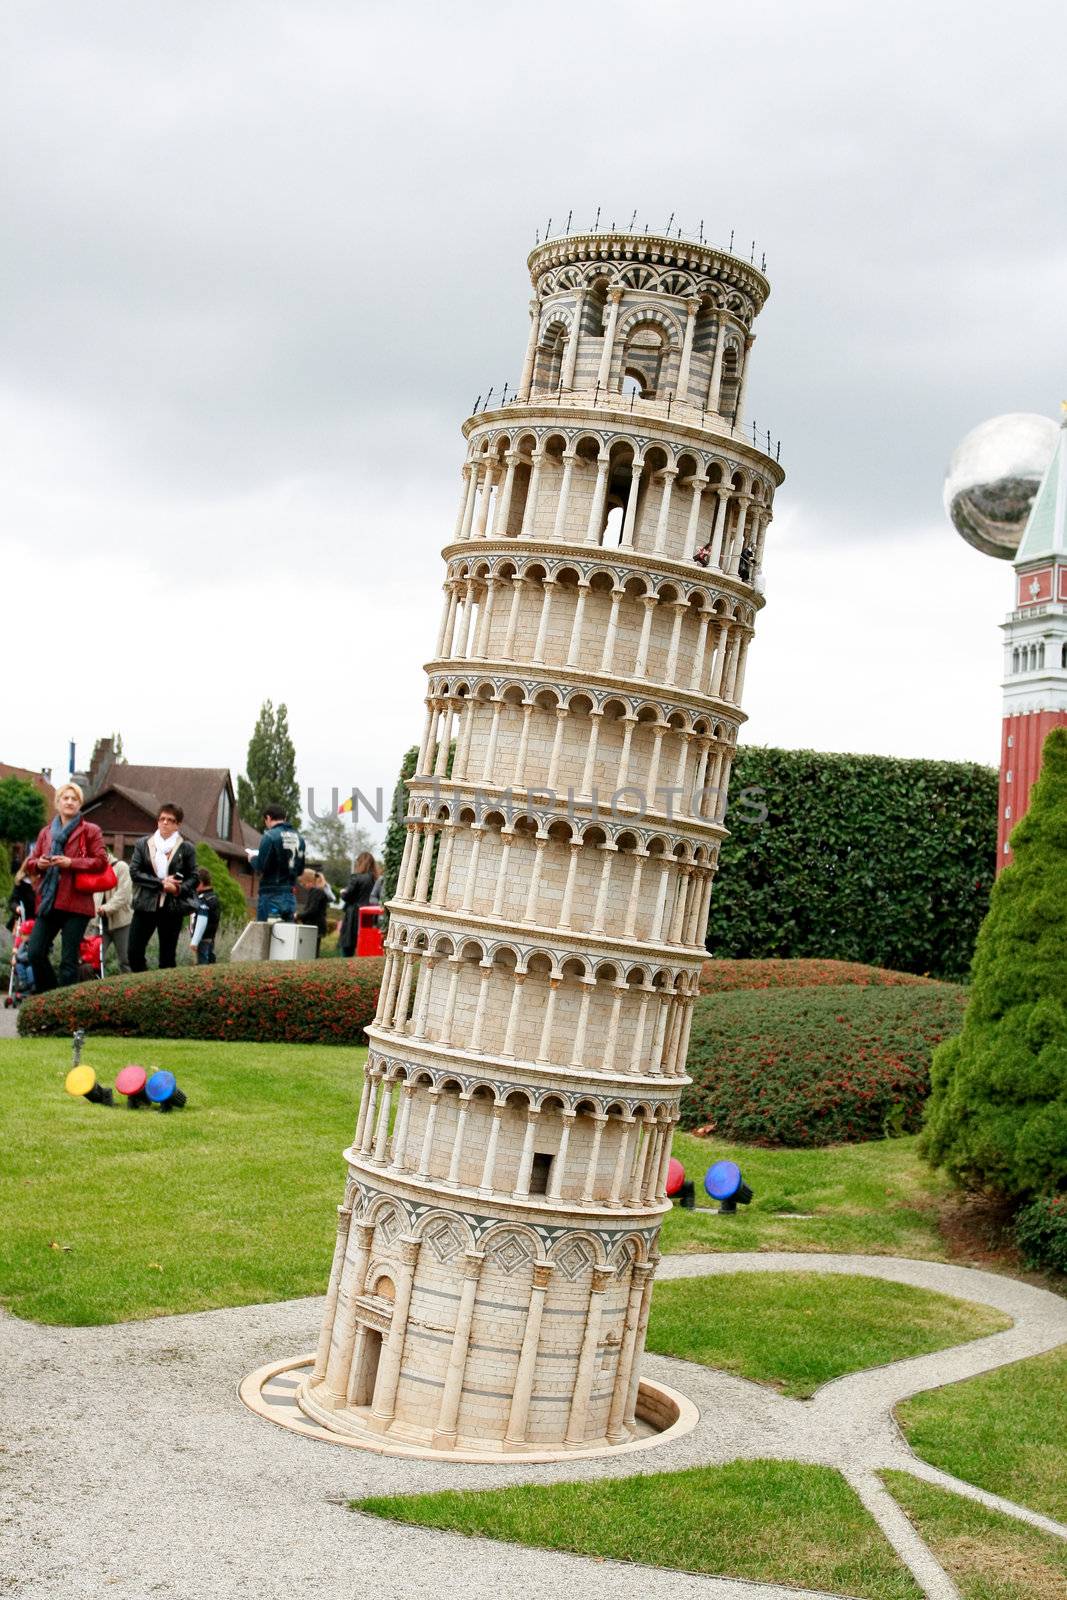 BRUSSELS - OCTOBER 4: Miniature model of Pisa tower in Mini Europe park. October 4, 2009, Brussels, Belgium